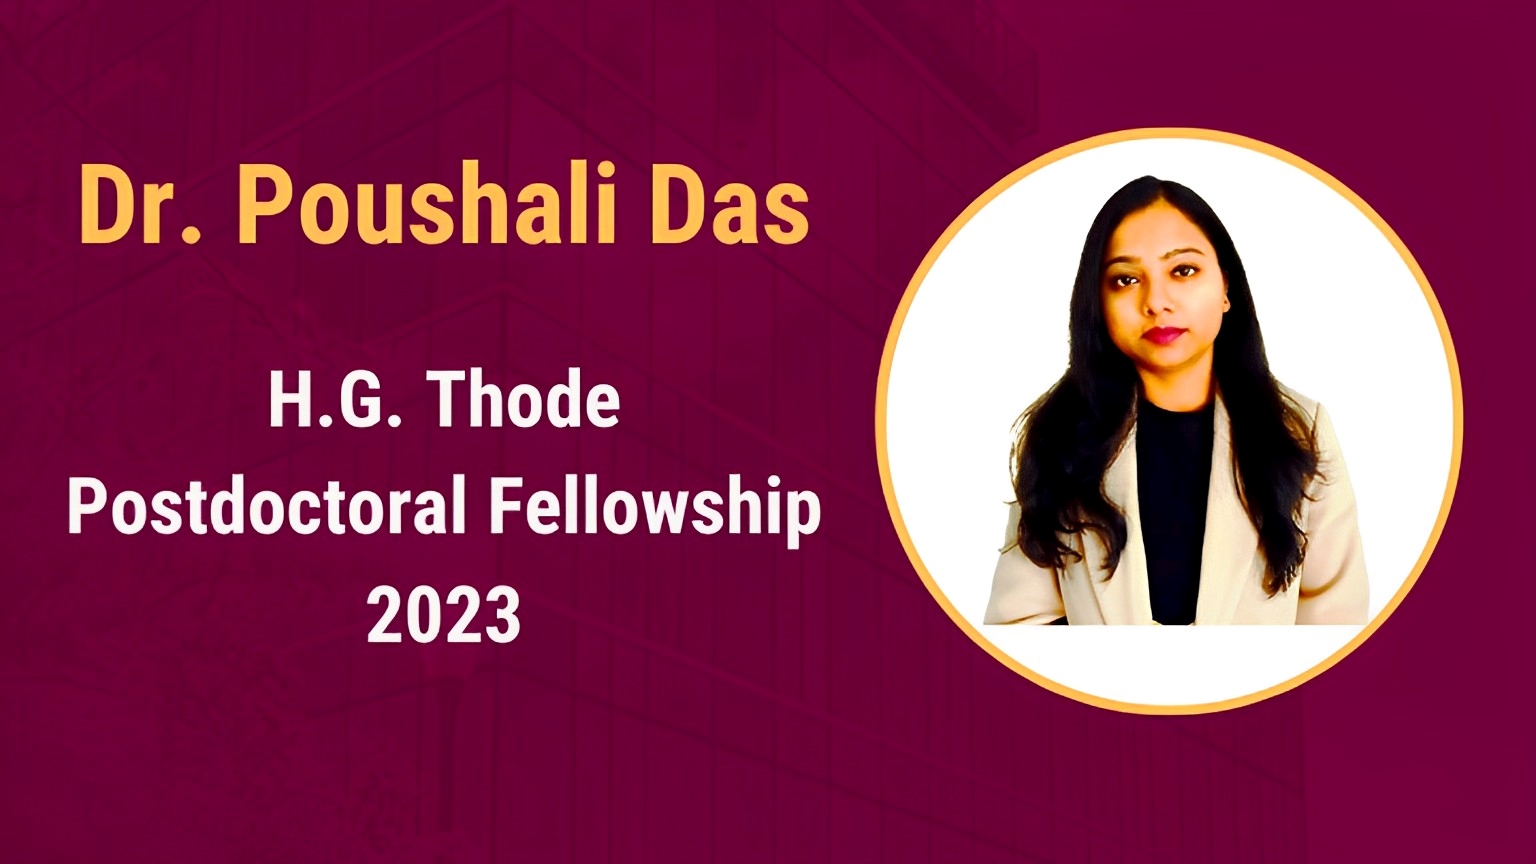 Postdoctoral Fellow Dr. Poushali Das announced as the recipient of the prestigious two-year H.G. Thode Fellowship